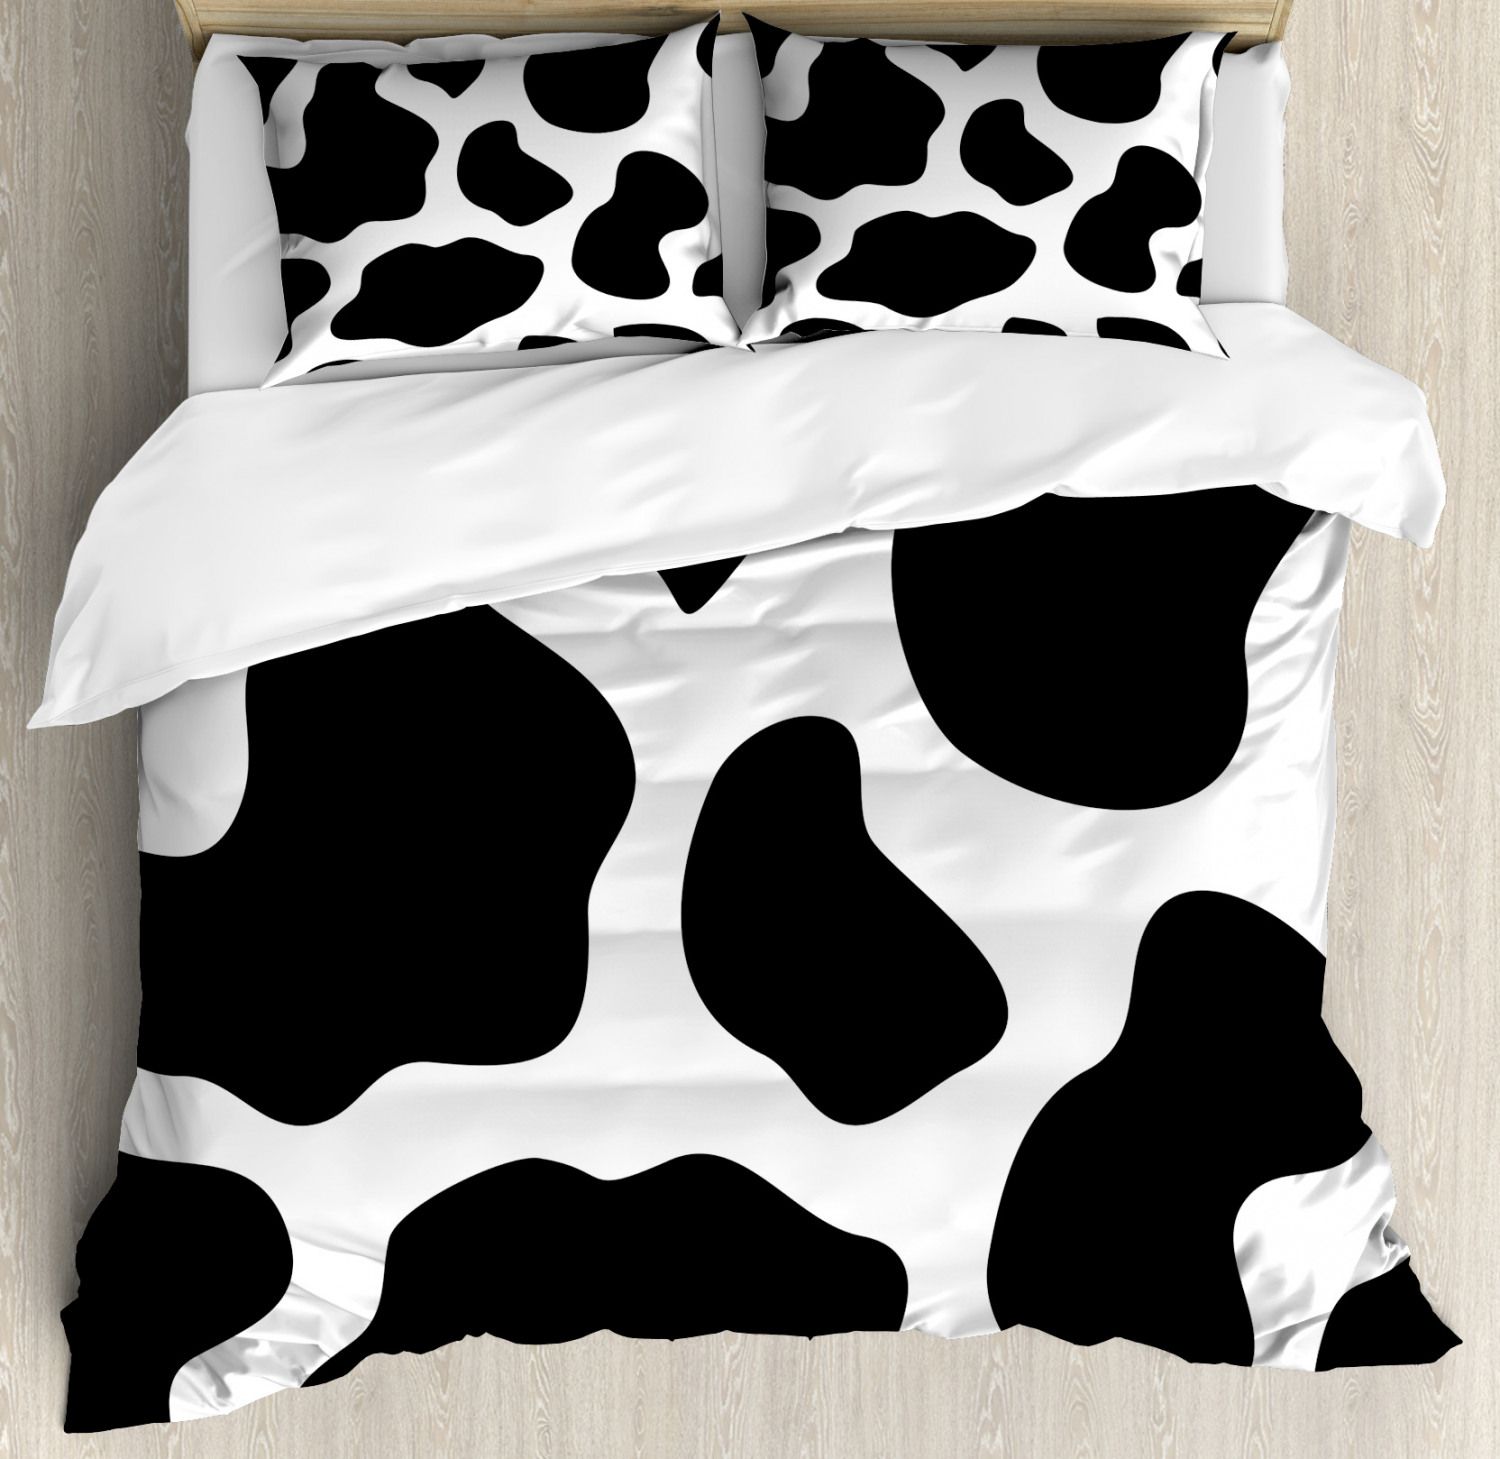 Cow Print Duvet Cover Set With Pillow Shams White Cow Hide Barn